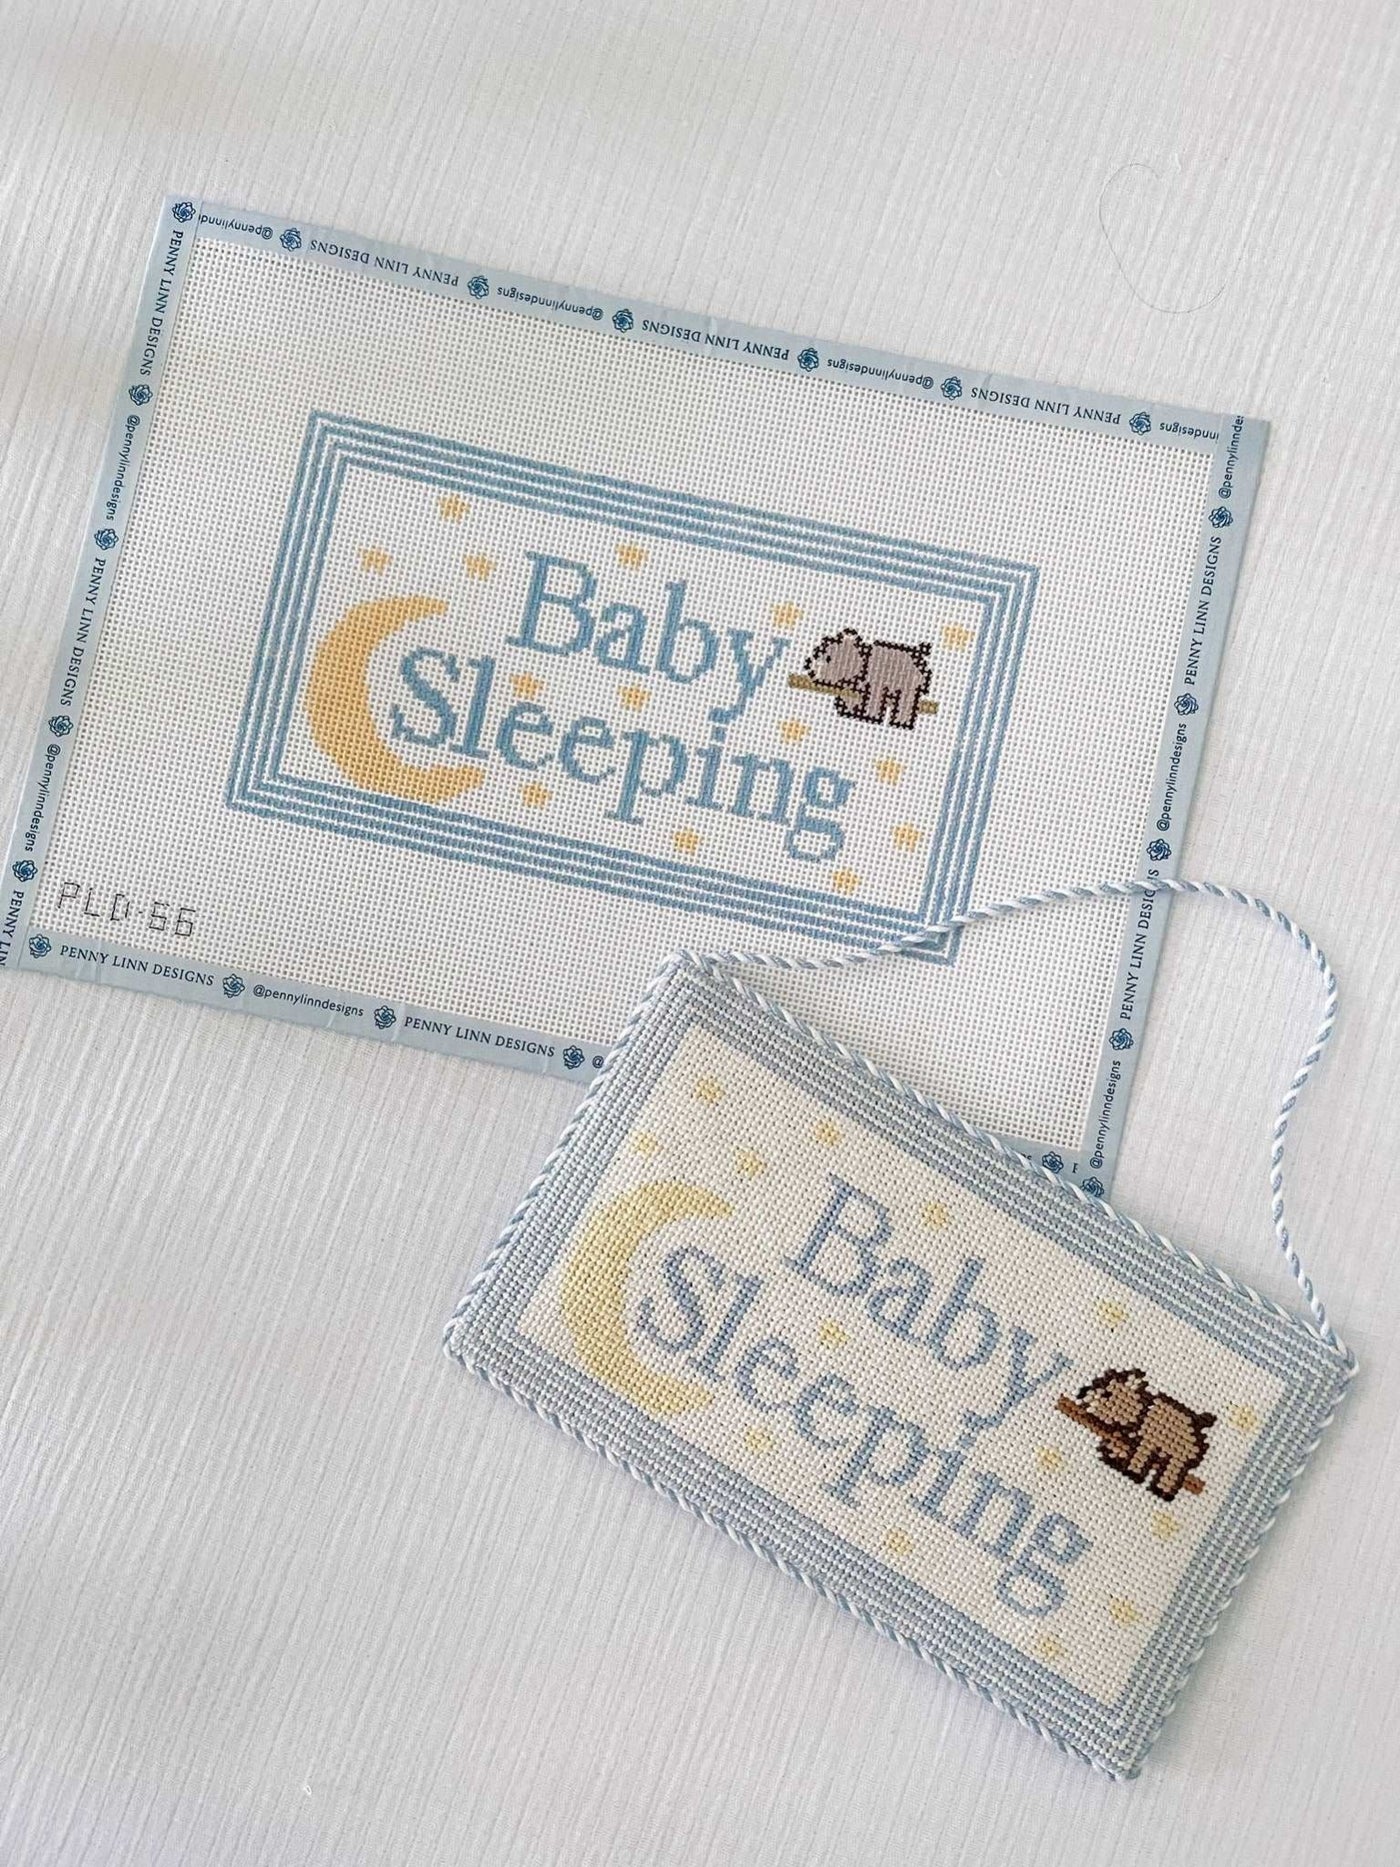 Baby Sleeping Bear - Penny Linn Designs - Penny Linn Designs